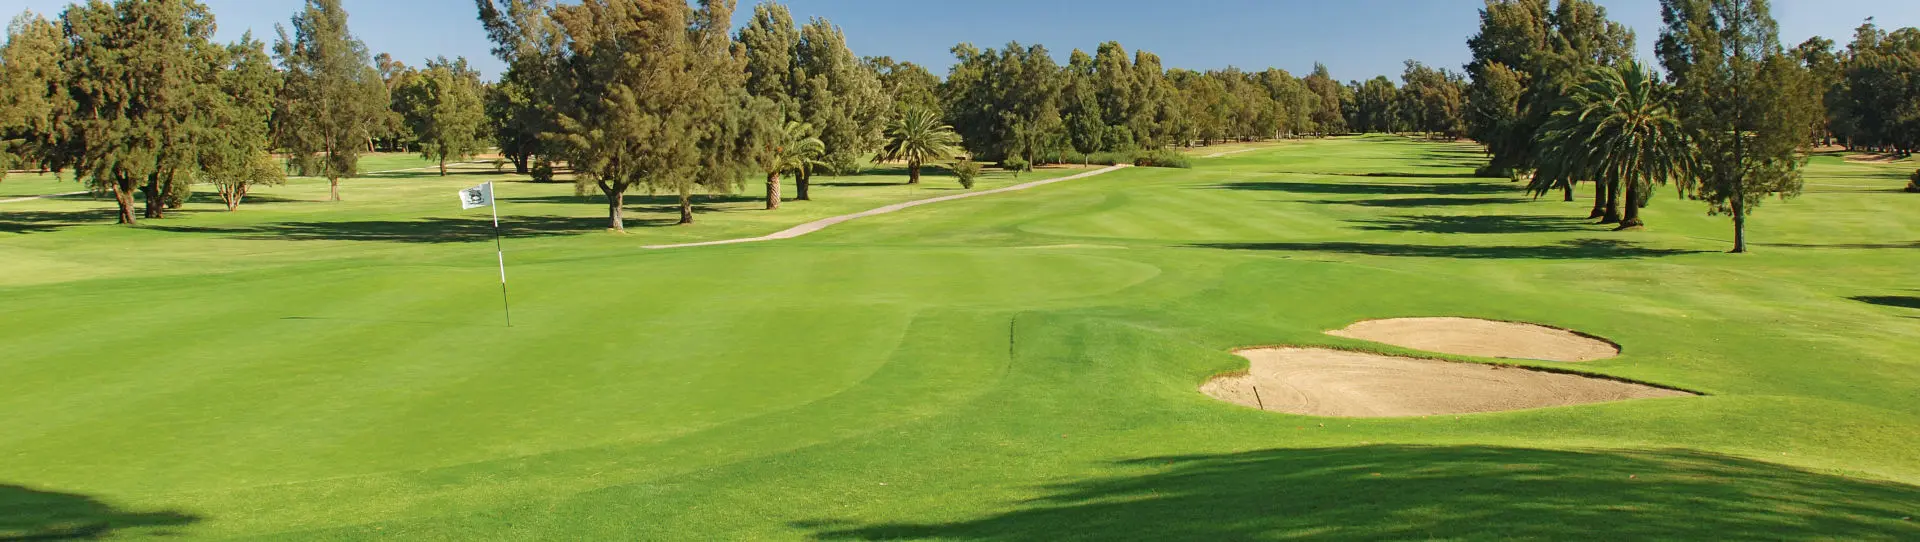 Portugal golf courses - Penina Championship - Photo 1